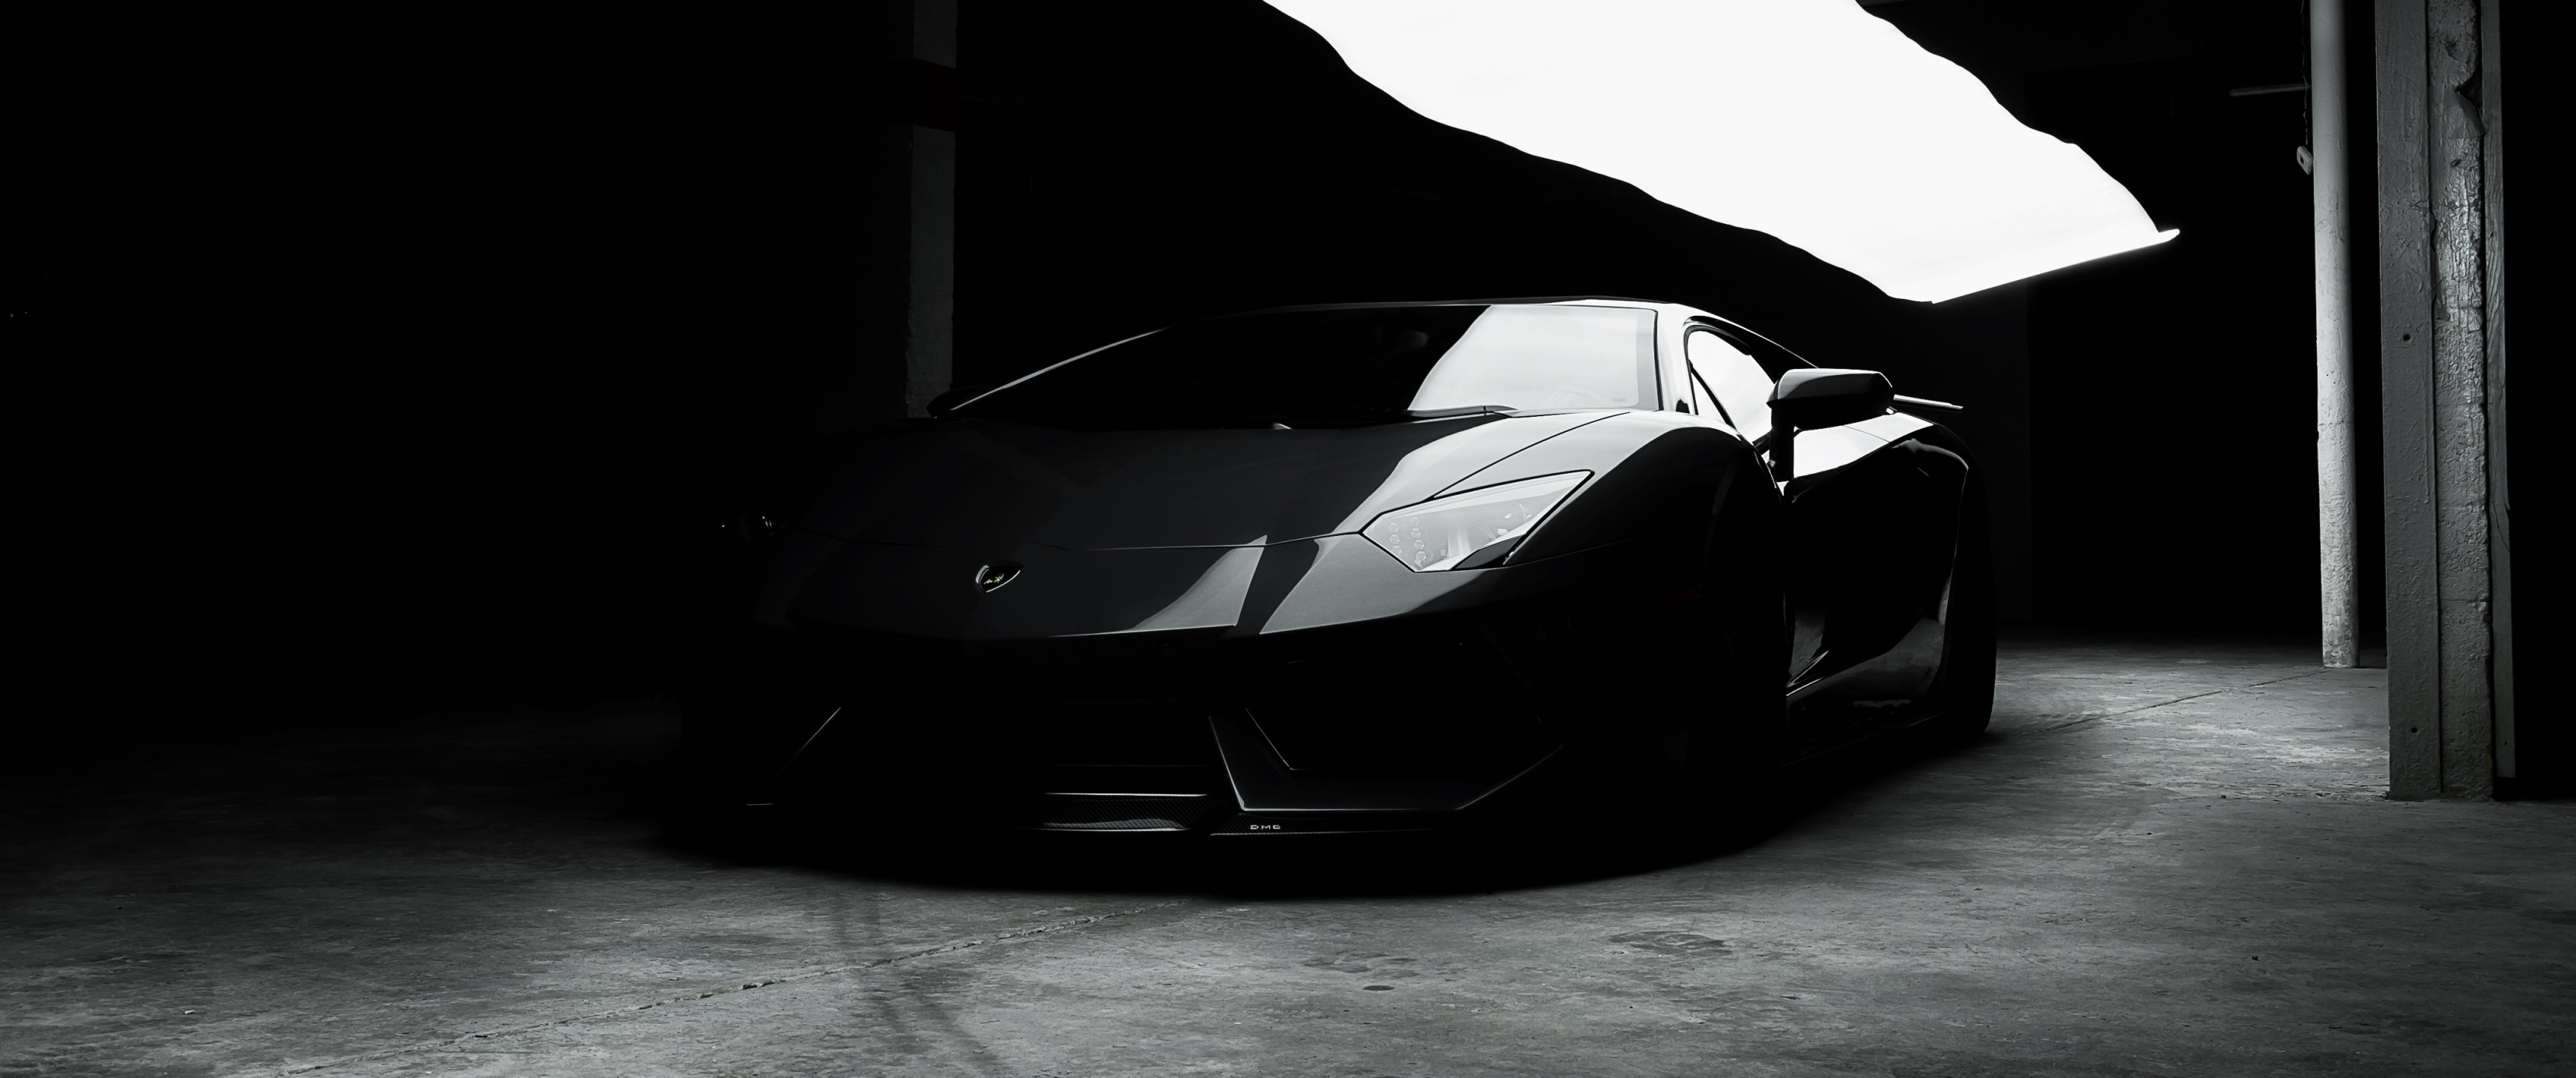 Lamborghini Aventador Wallpaper 4K, Black cars, CGI, Black/Dark, #3458